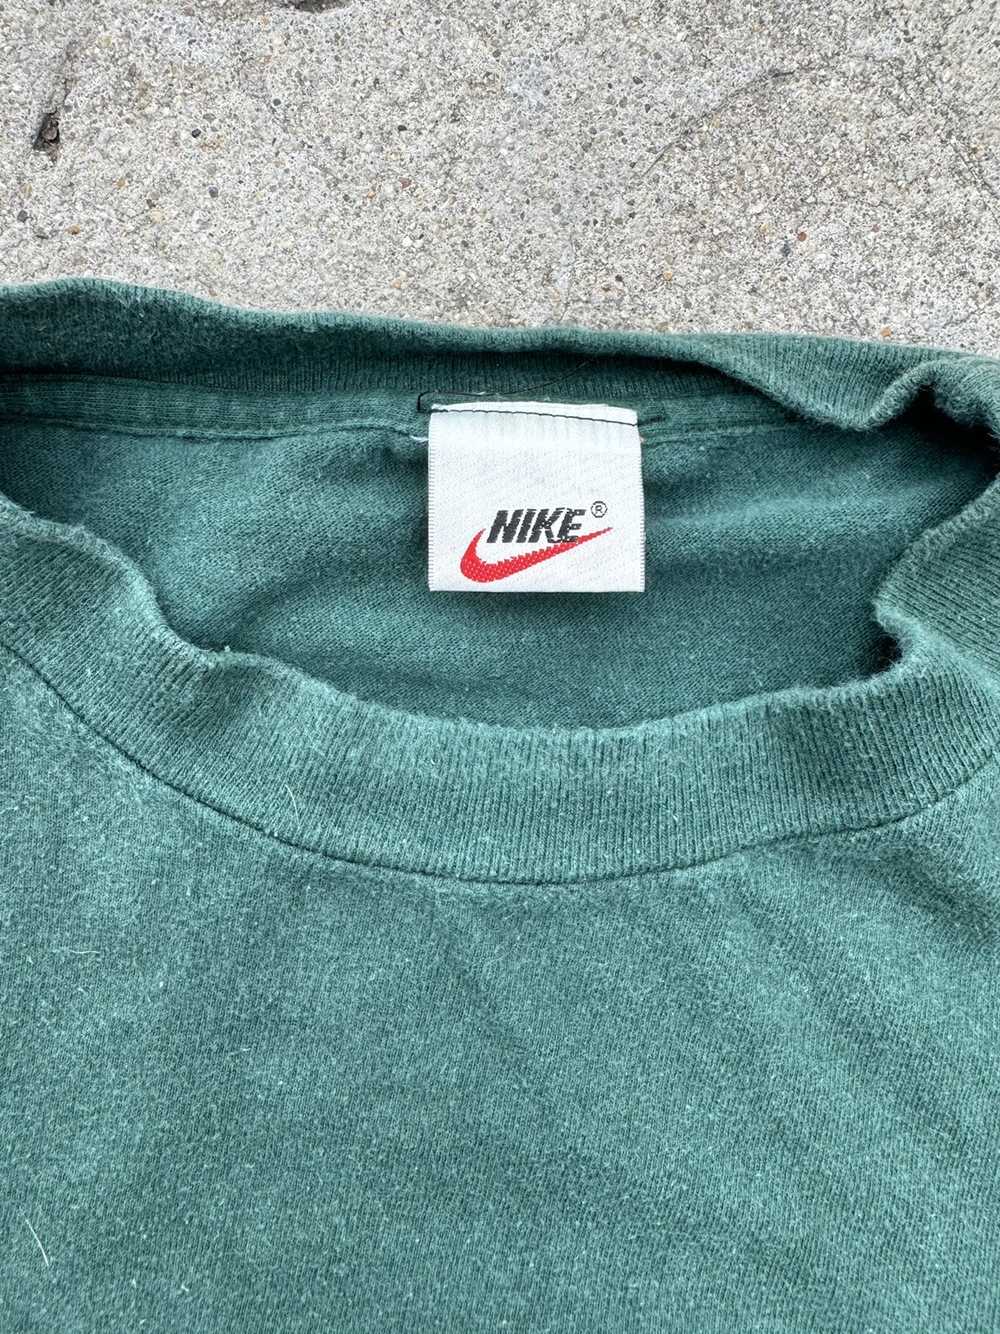 Nike vintage nike t shirt - image 2